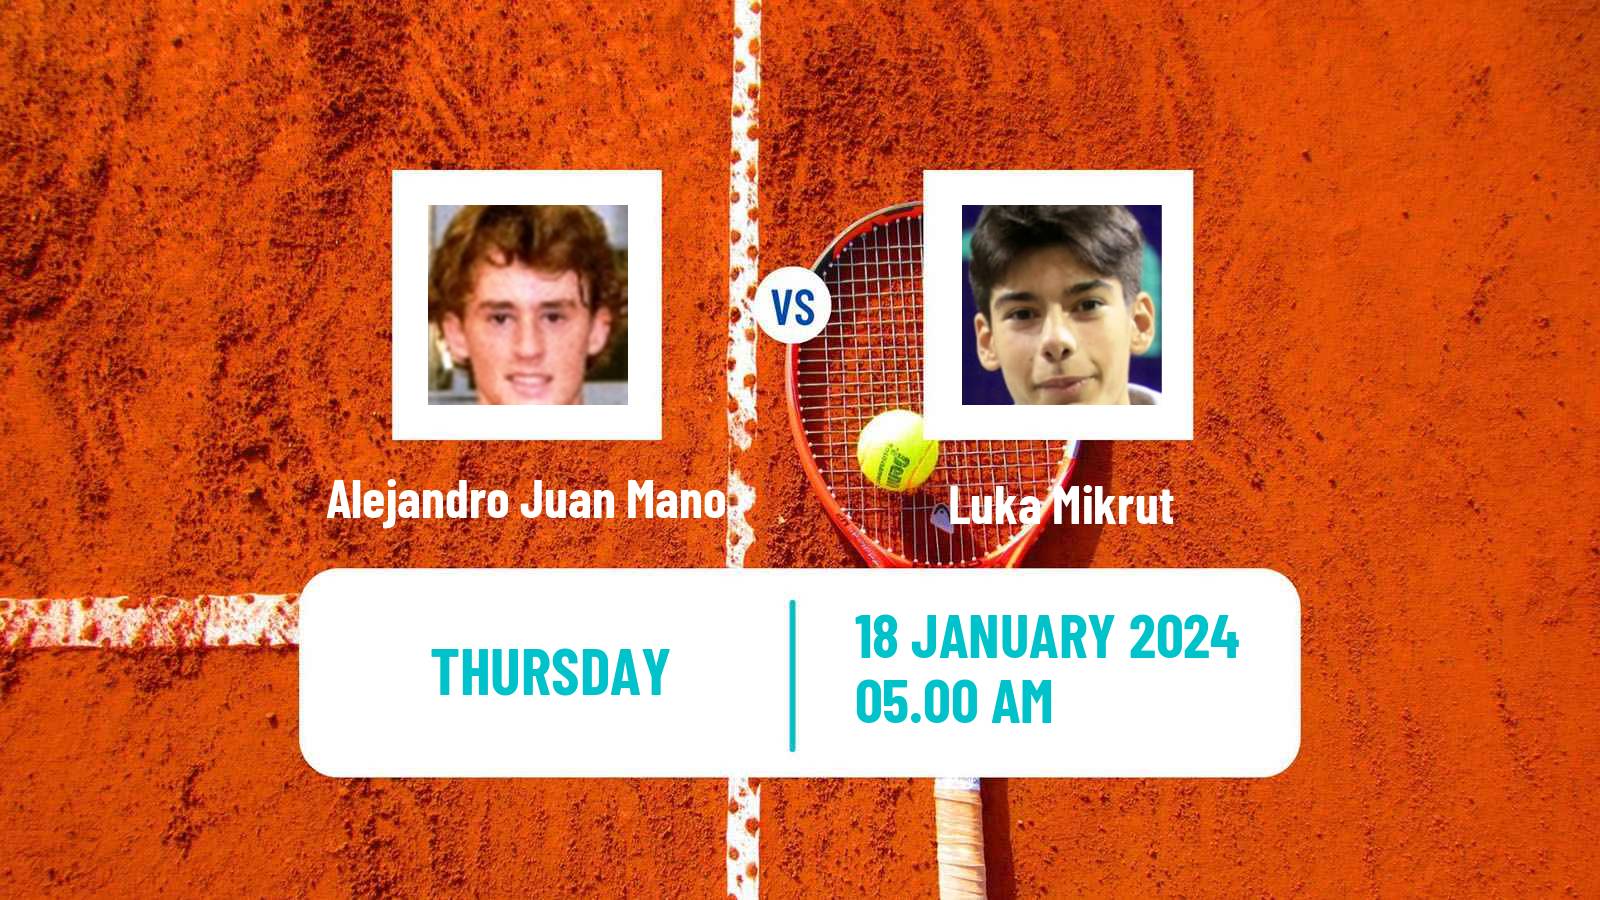 Tennis ITF M15 Manacor 2 Men Alejandro Juan Mano - Luka Mikrut